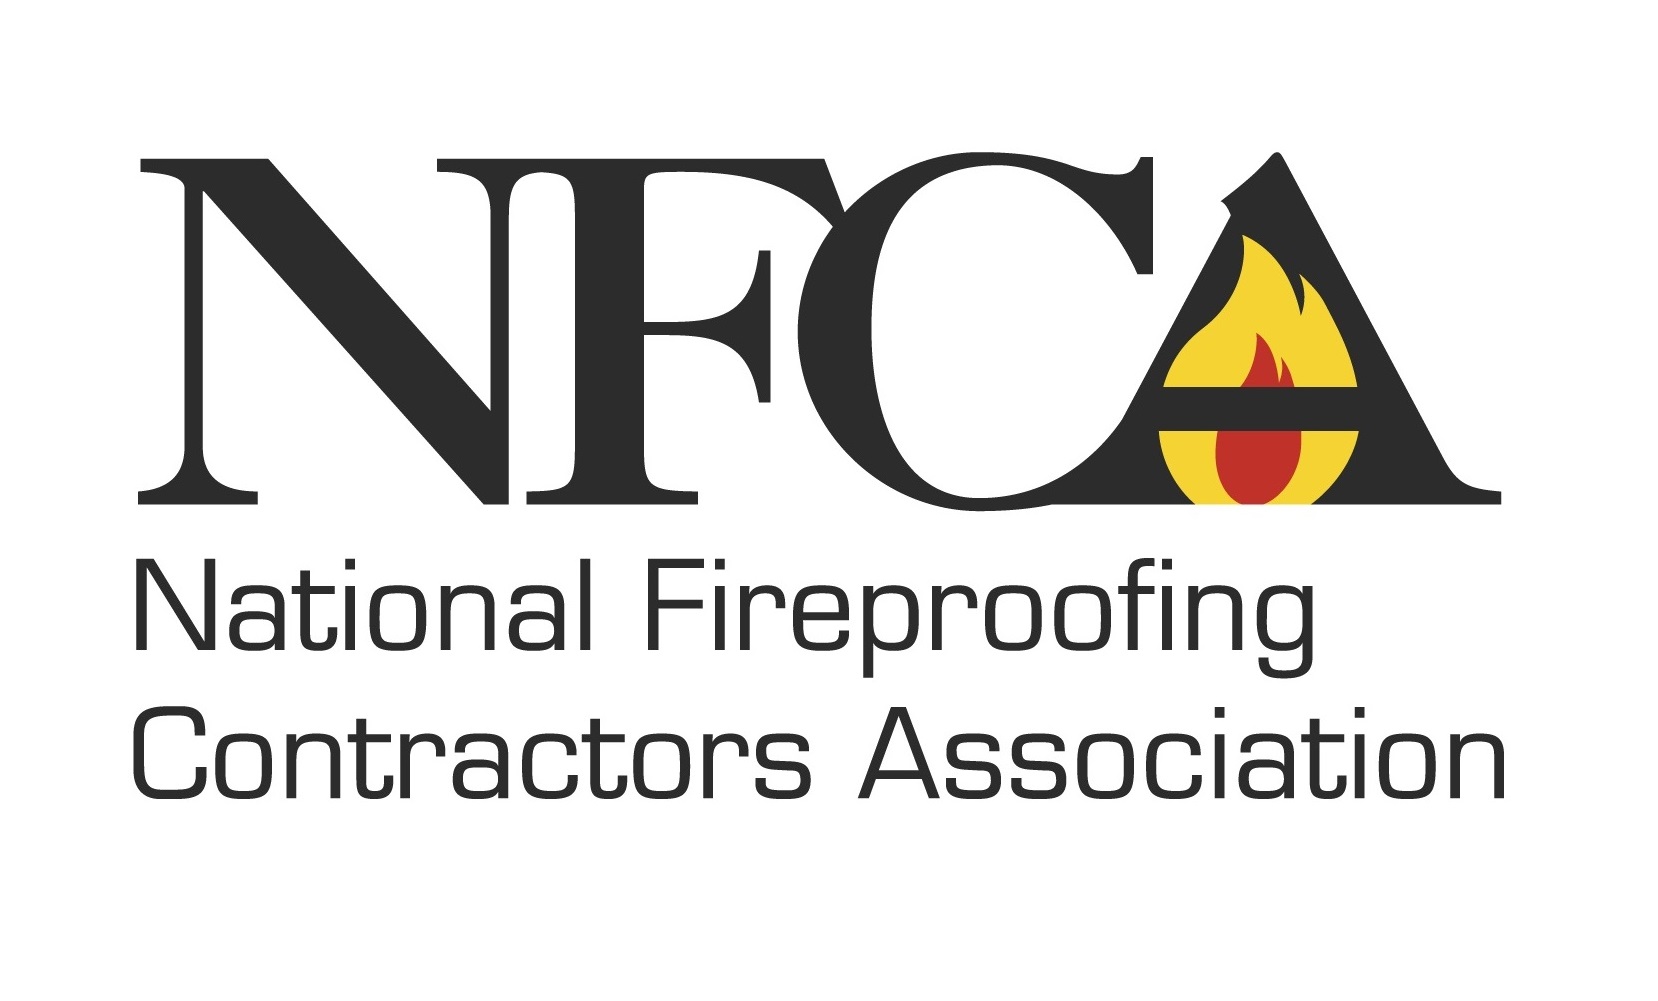 National Fireproofing Contractors Association logo